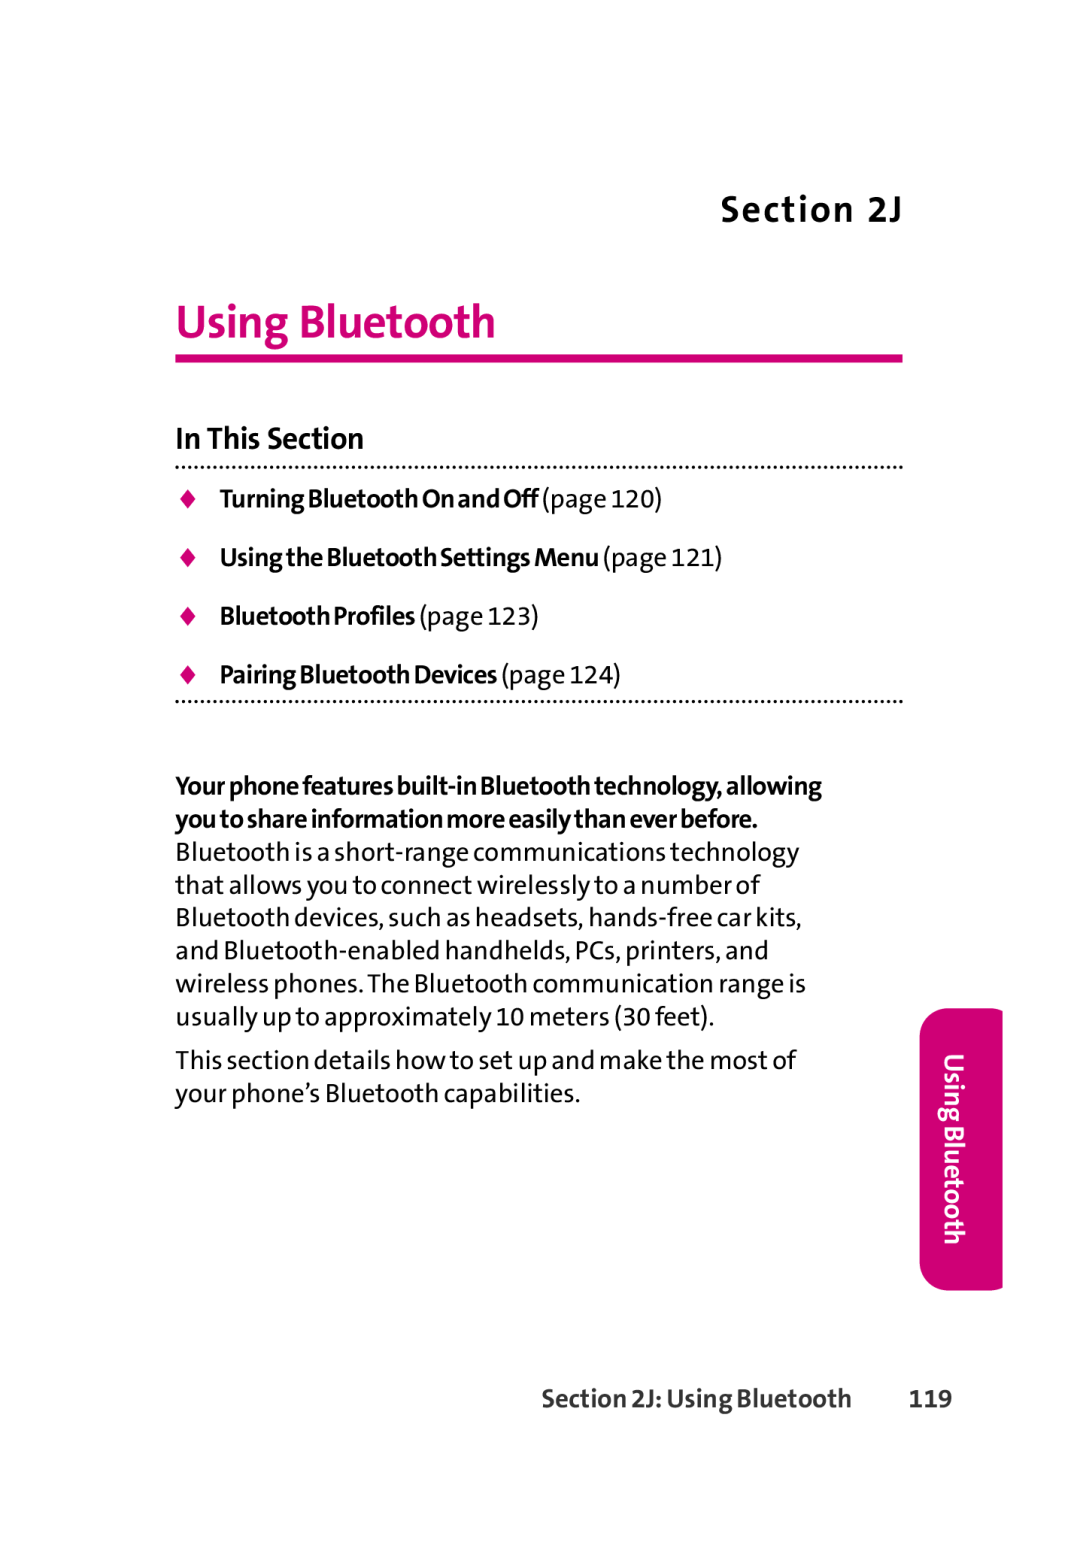 LG Electronics 350 Using Bluetooth, J, TurningBluetoothOnandOffpage UsingtheBluetoothSettingsMenupage, In This Section 